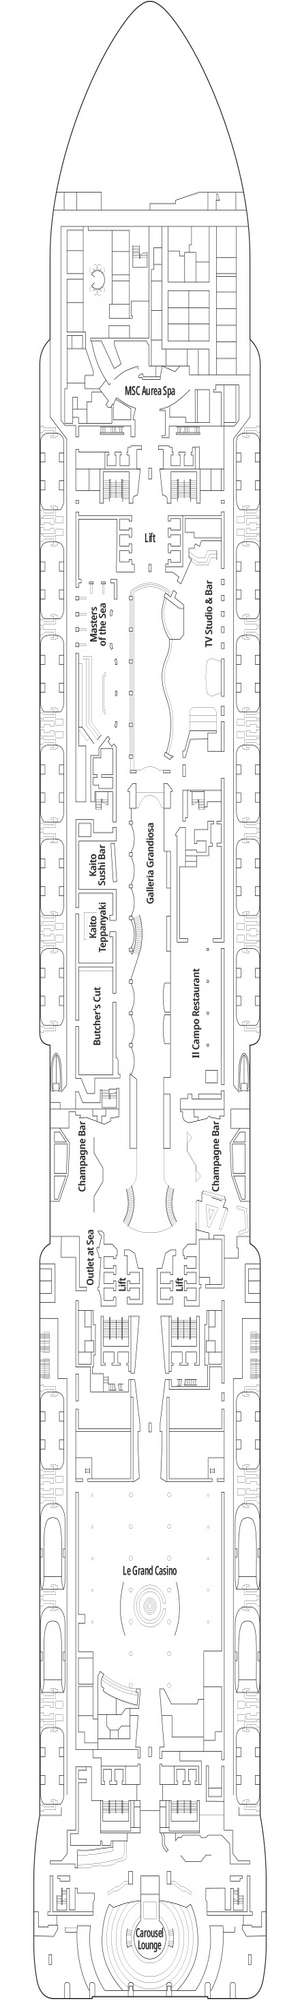 Deck plan for MSC Grandiosa